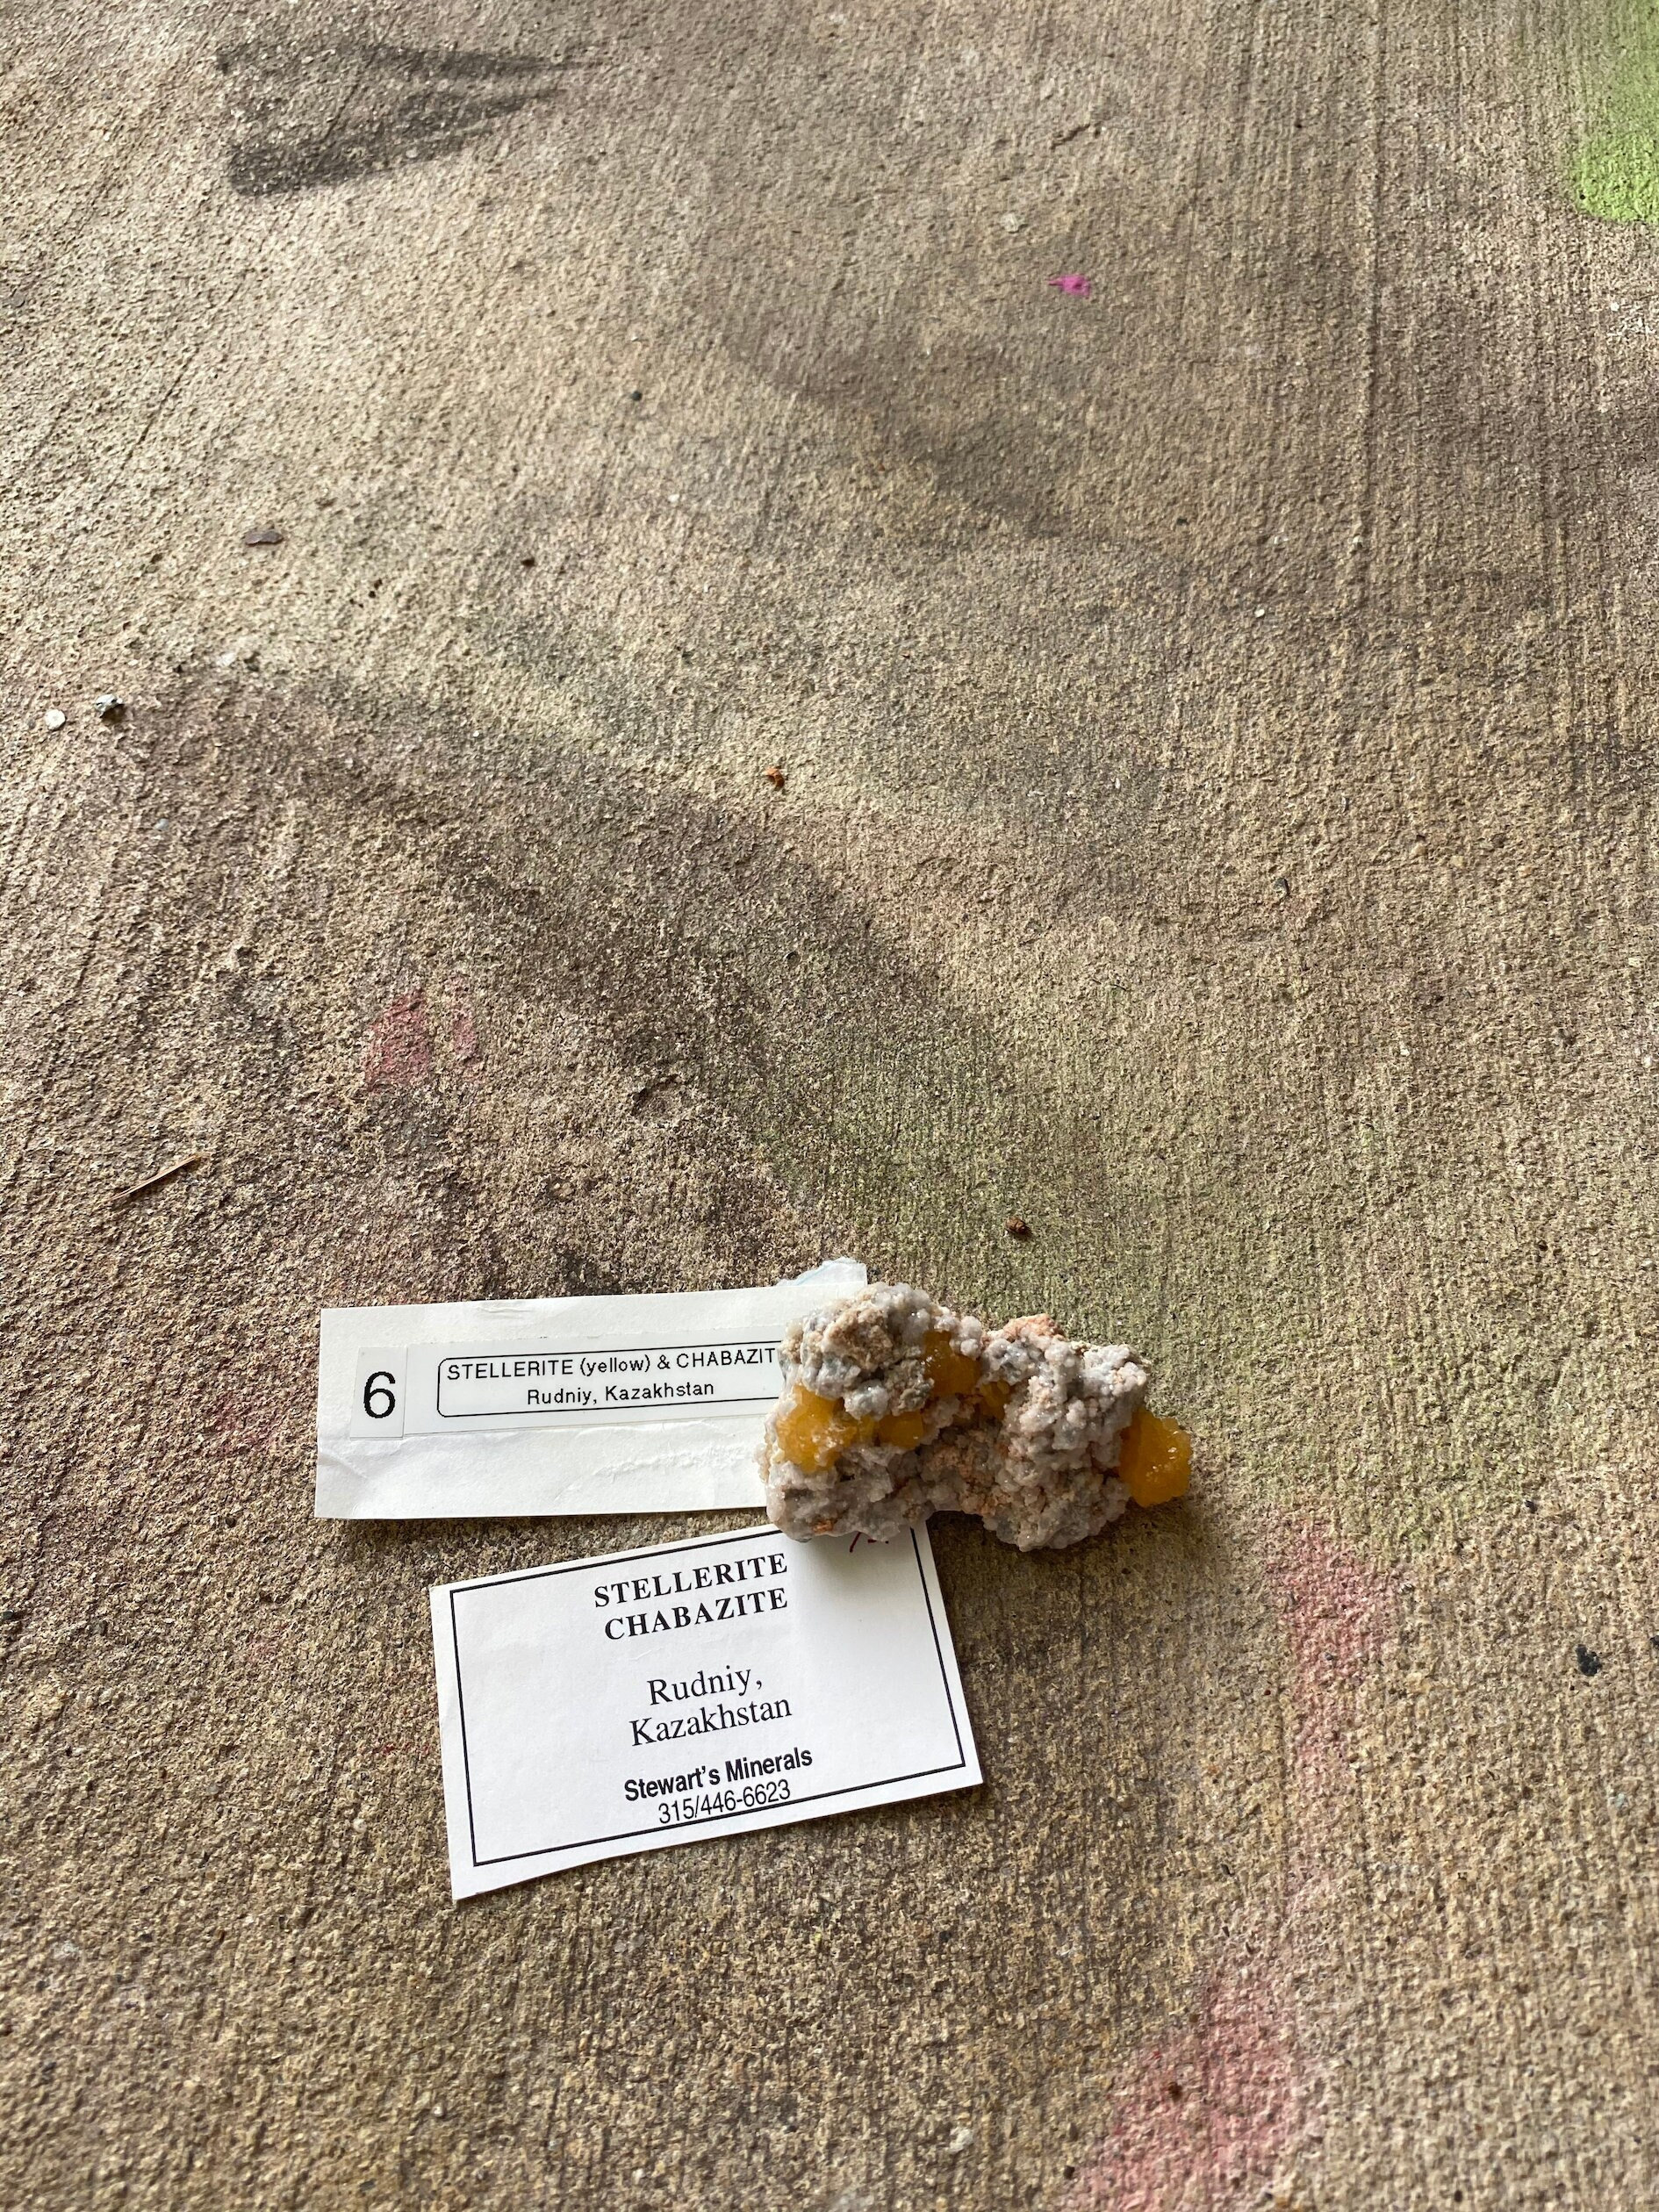 Stellerite on Chabazite specimen